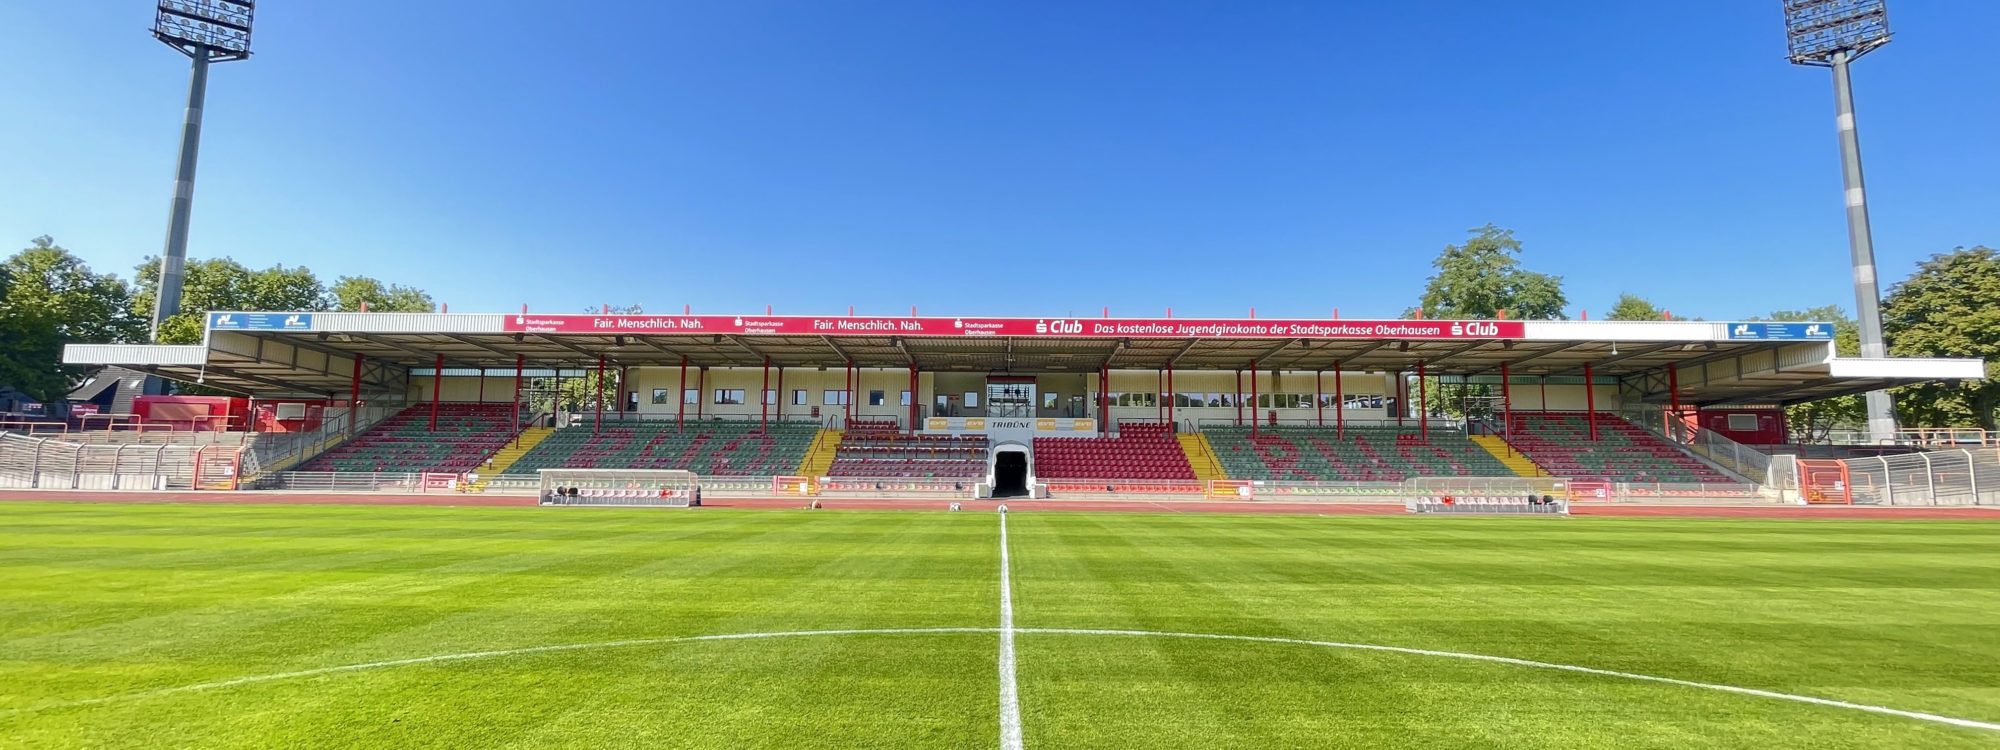 L'immagine mostra lo stadio Niederrhein a Oberhausen